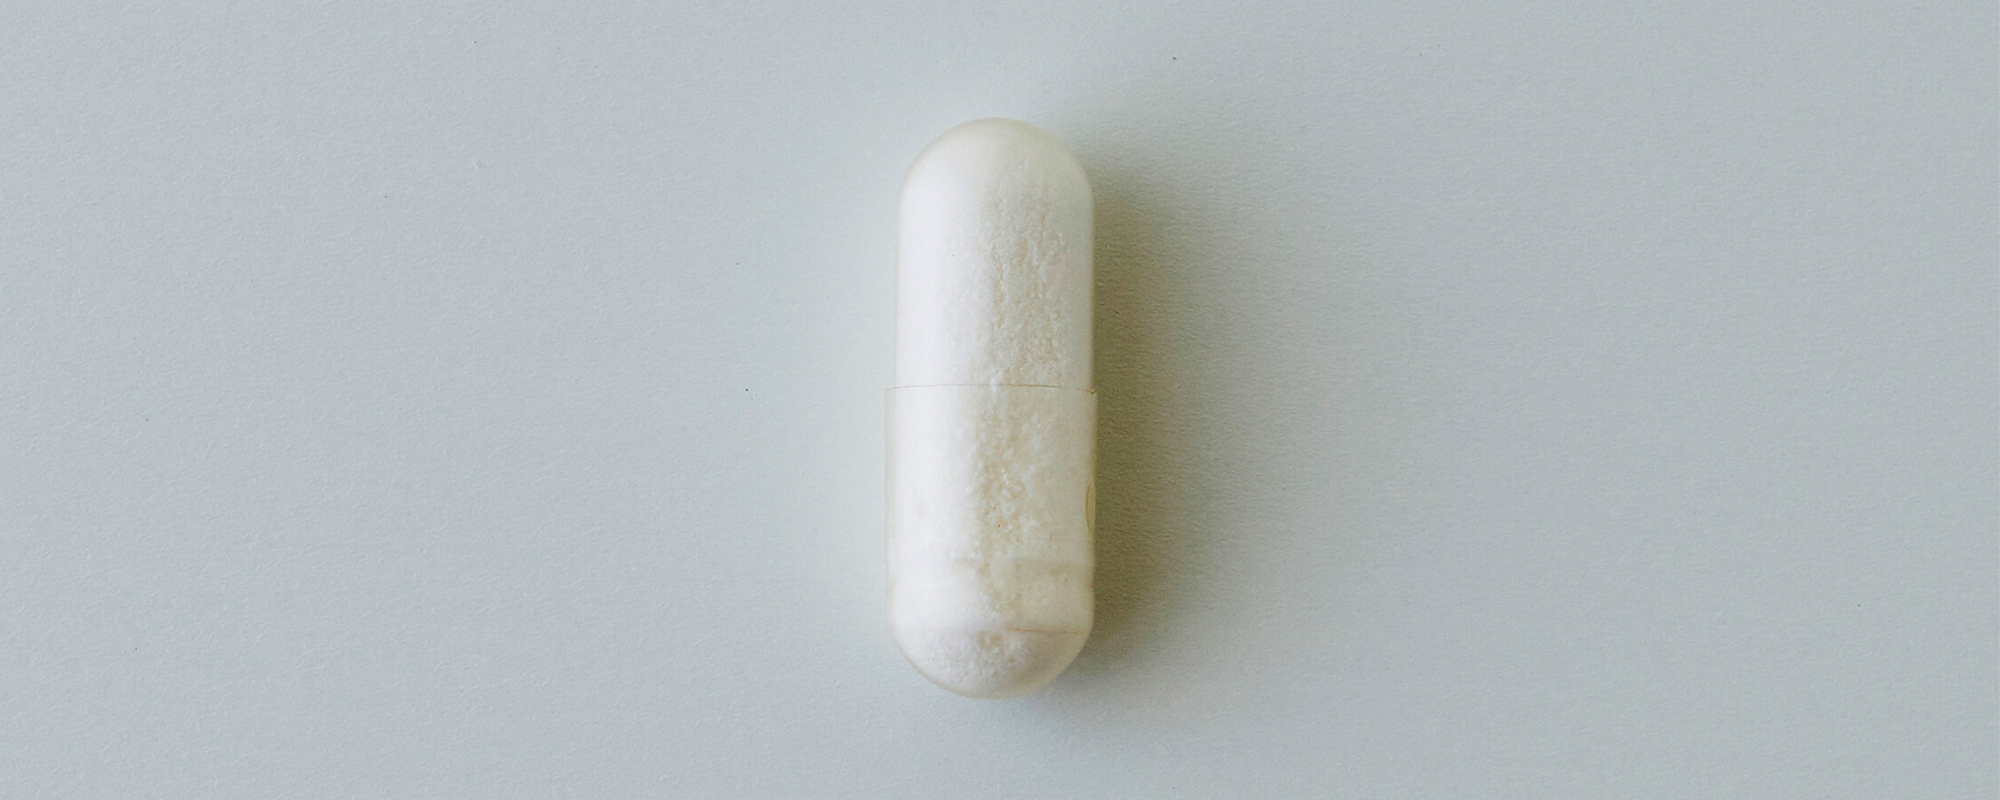 NAD supplement capsule